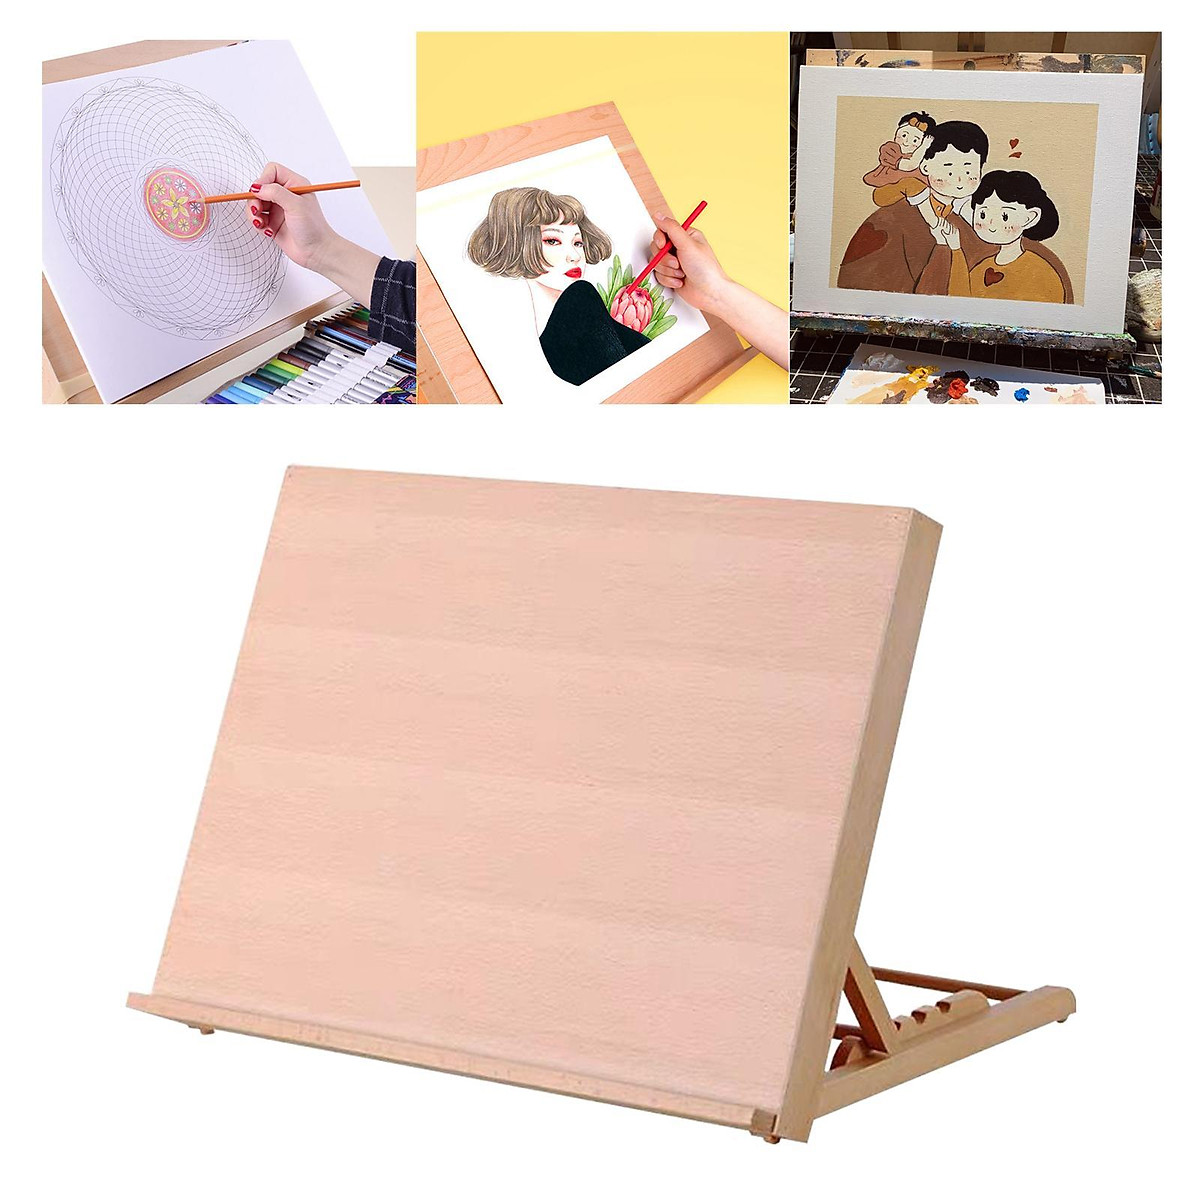 Blick Portable Drafting and Drawing Table | BLICK Art Materials